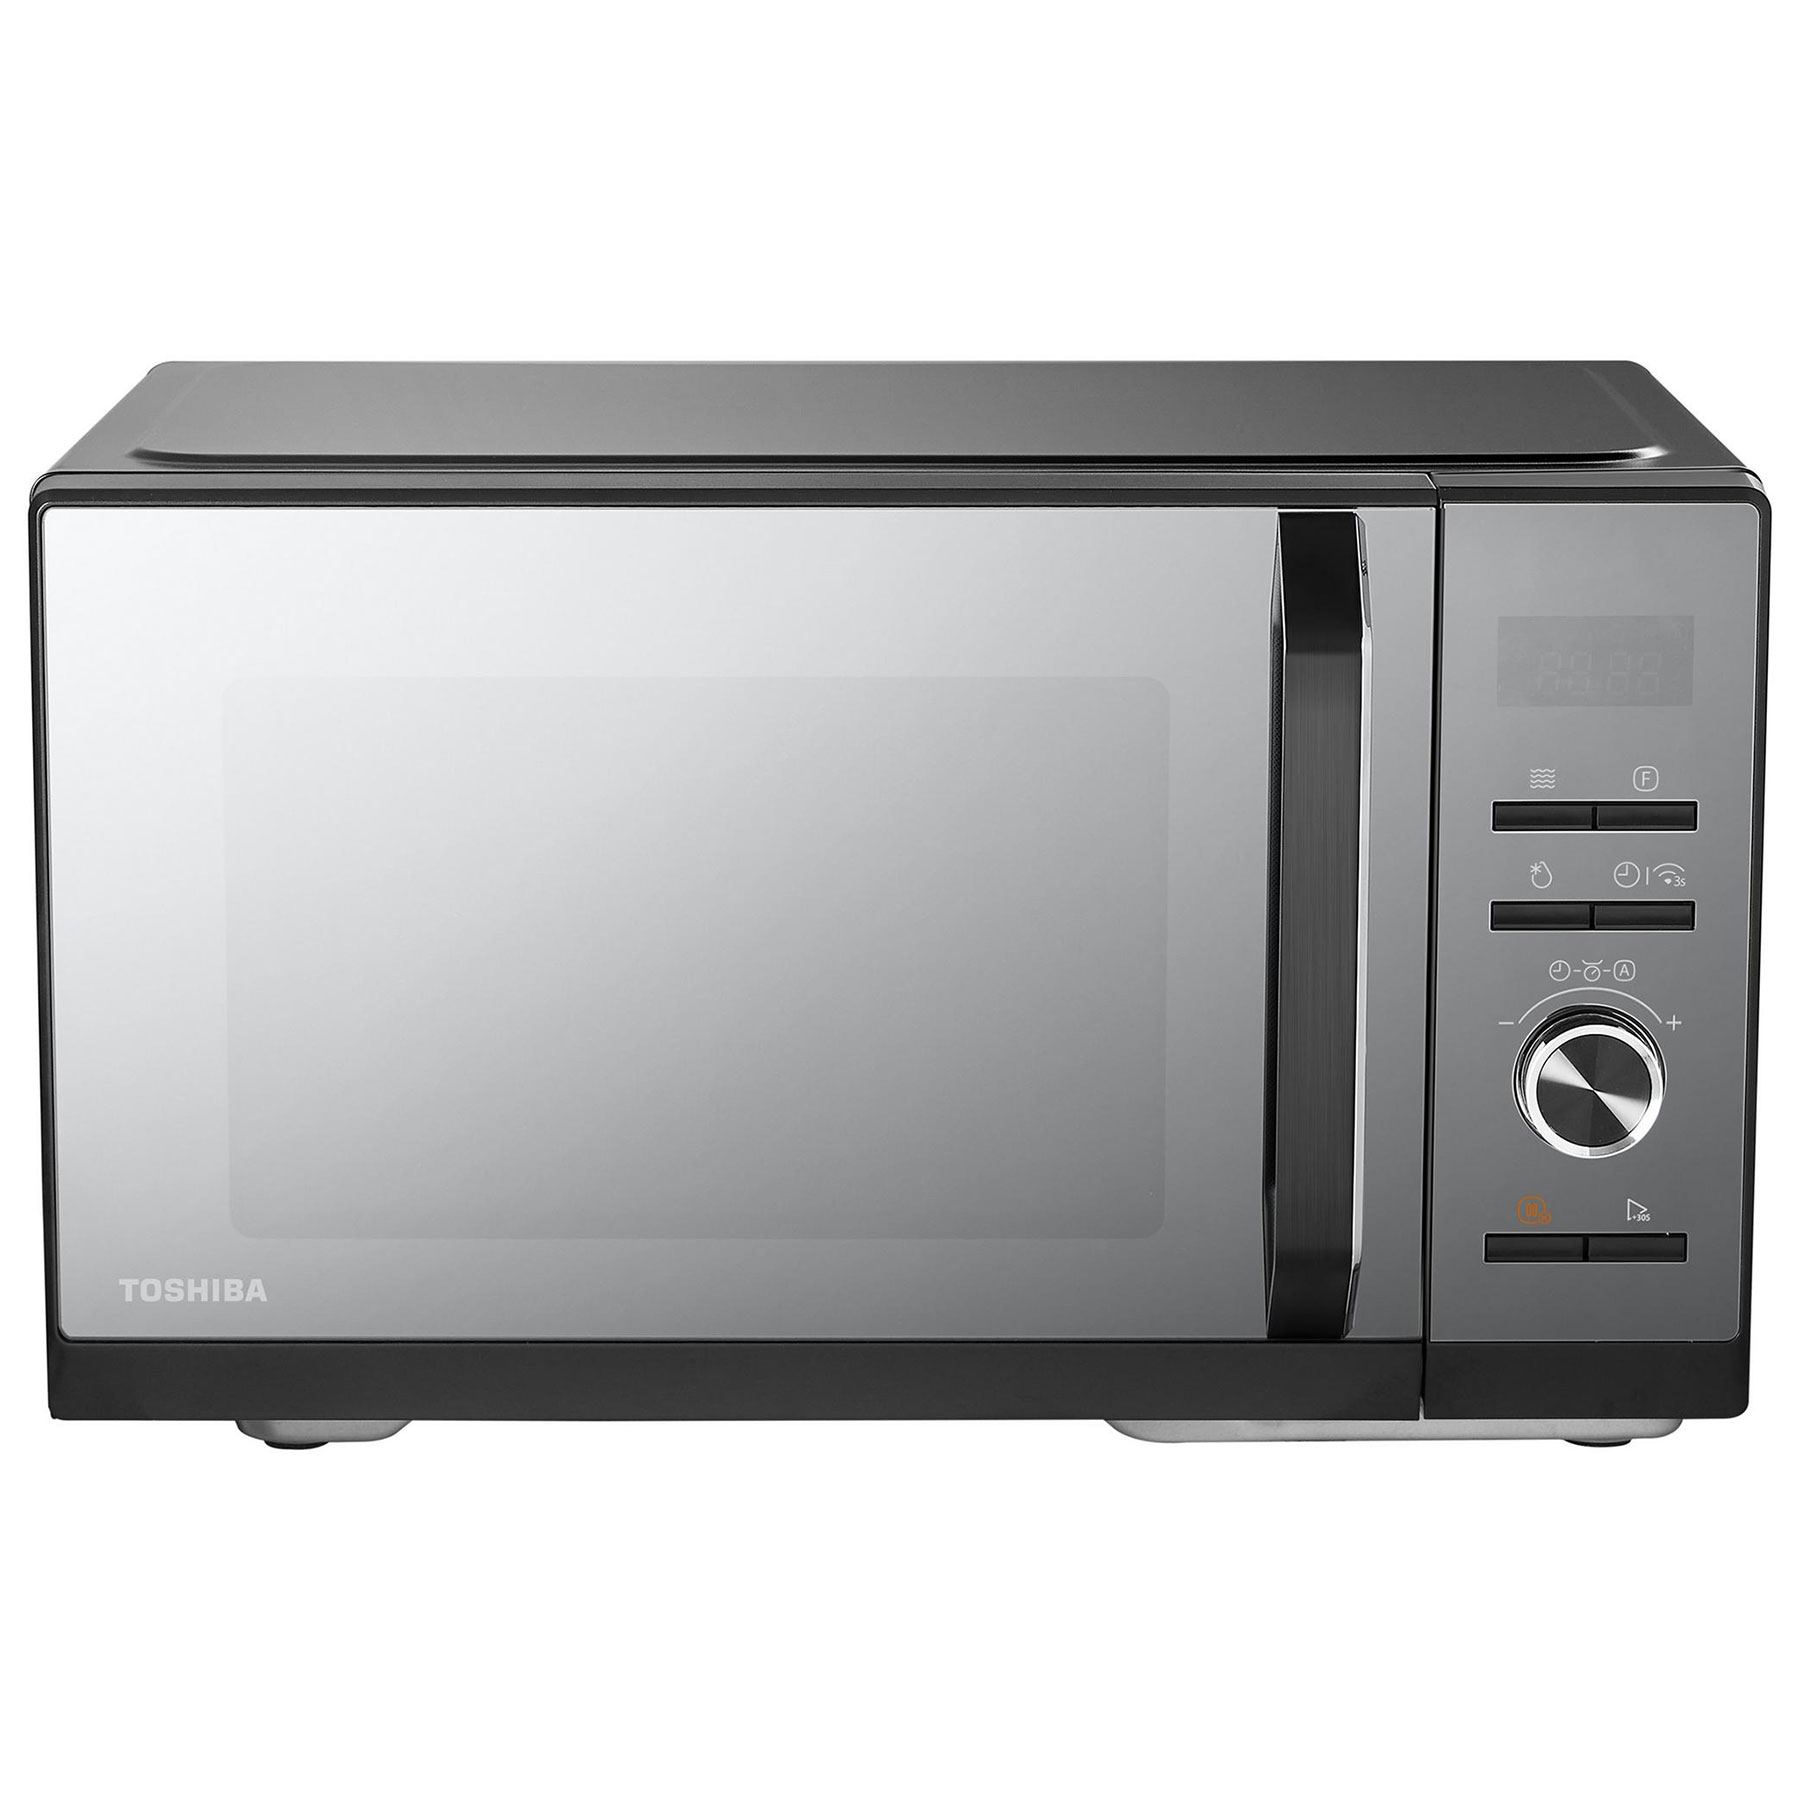 Toshiba MW3 SAC23SF Air Fryer Microwave Oven in Black 23L 900W